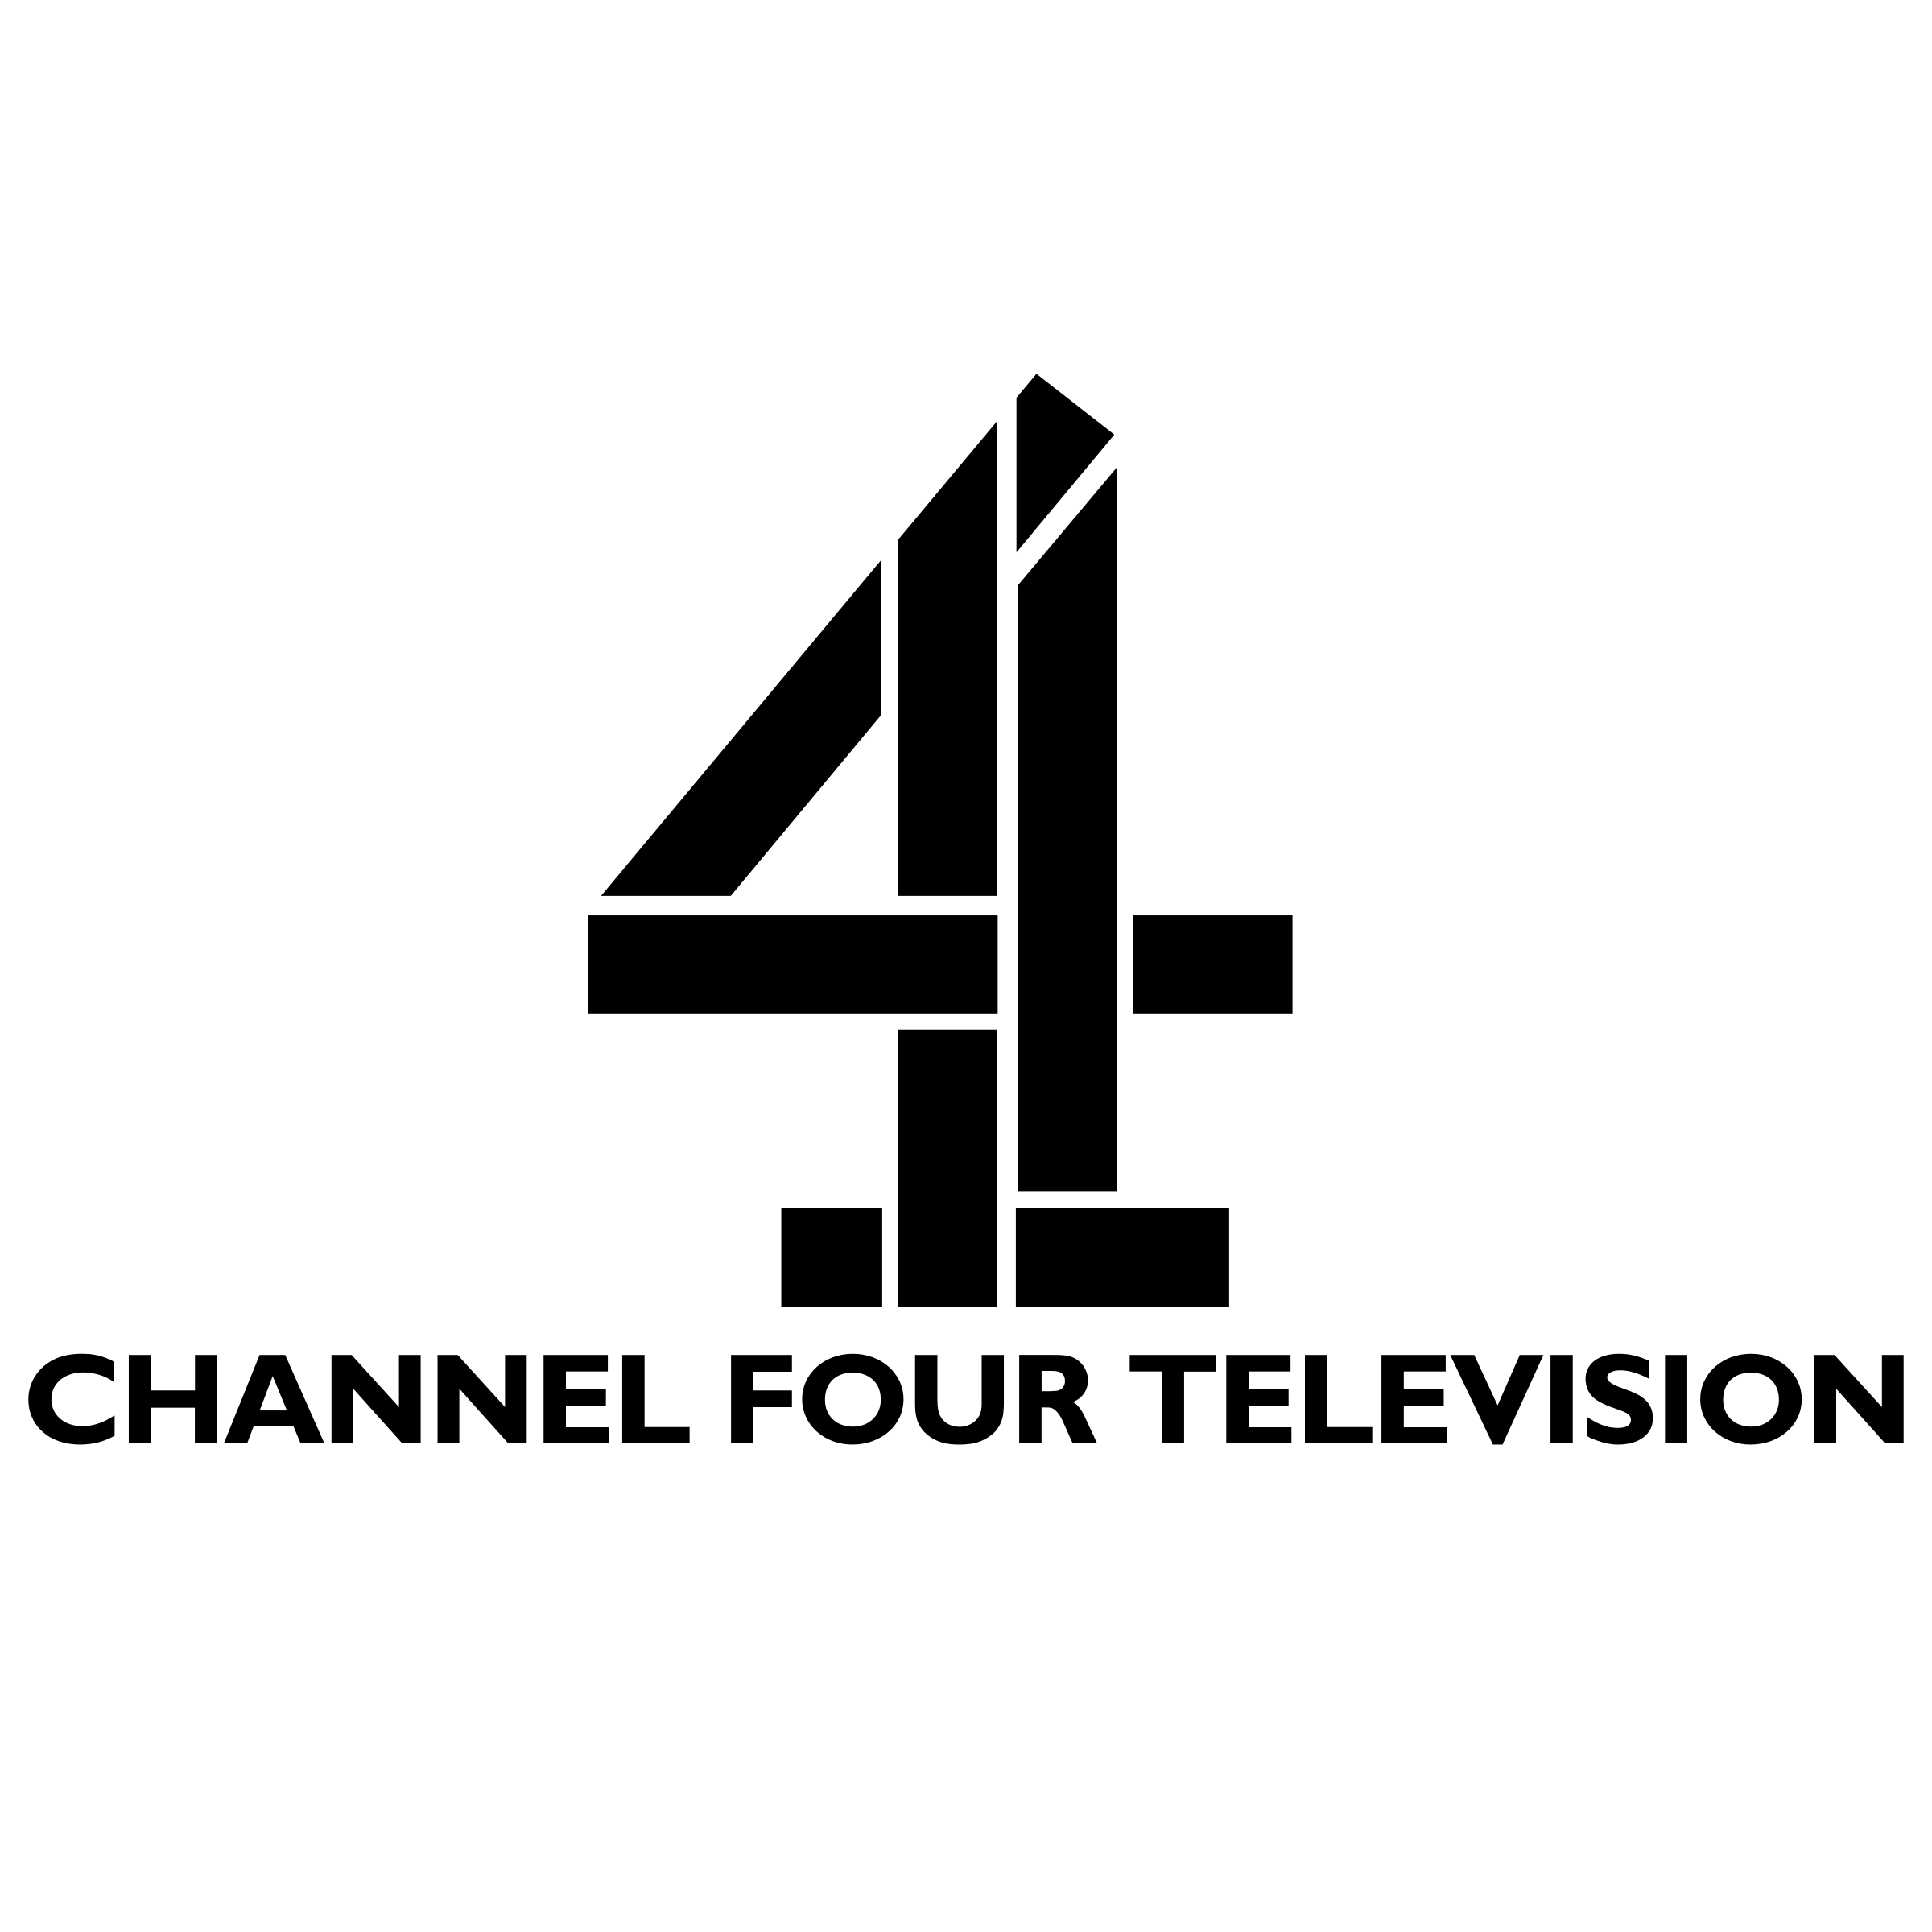 Channel 4 Logo - Channel 4 Logo PNG Transparent & SVG Vector - Freebie Supply